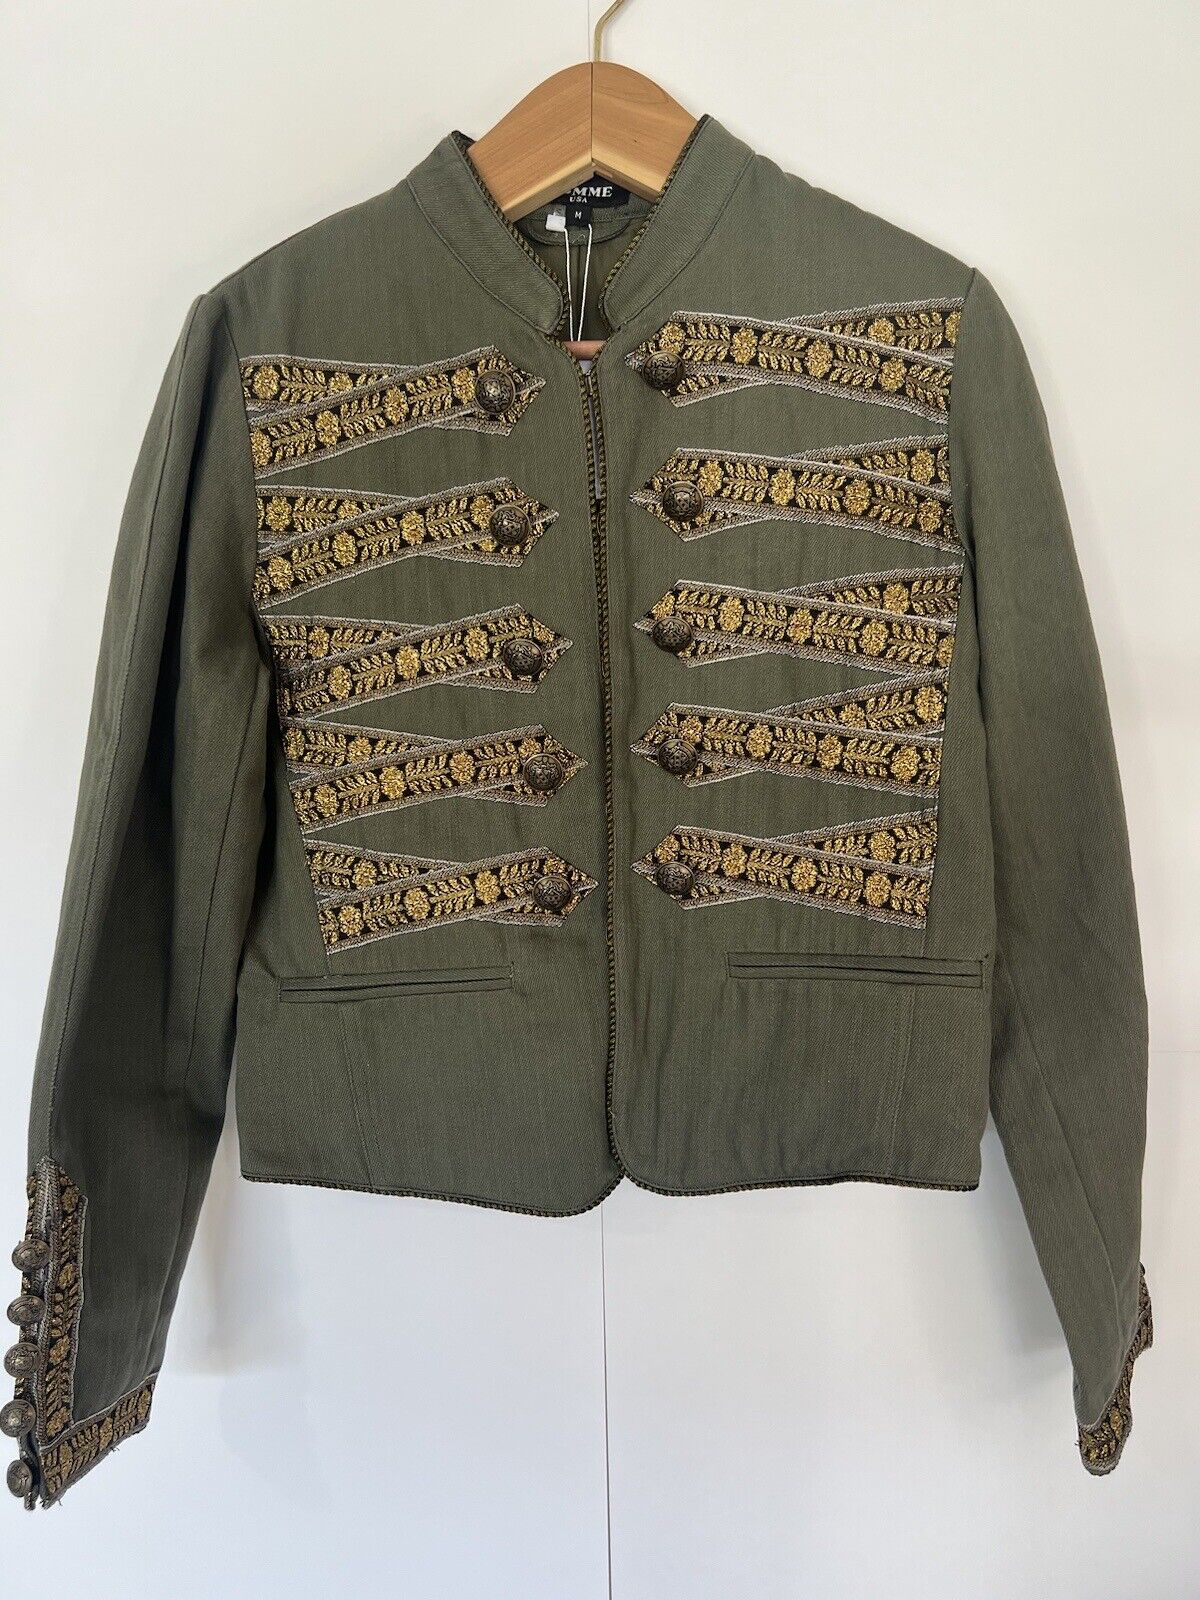 Comme USA Soldier Design Jacket Size Medium NWT